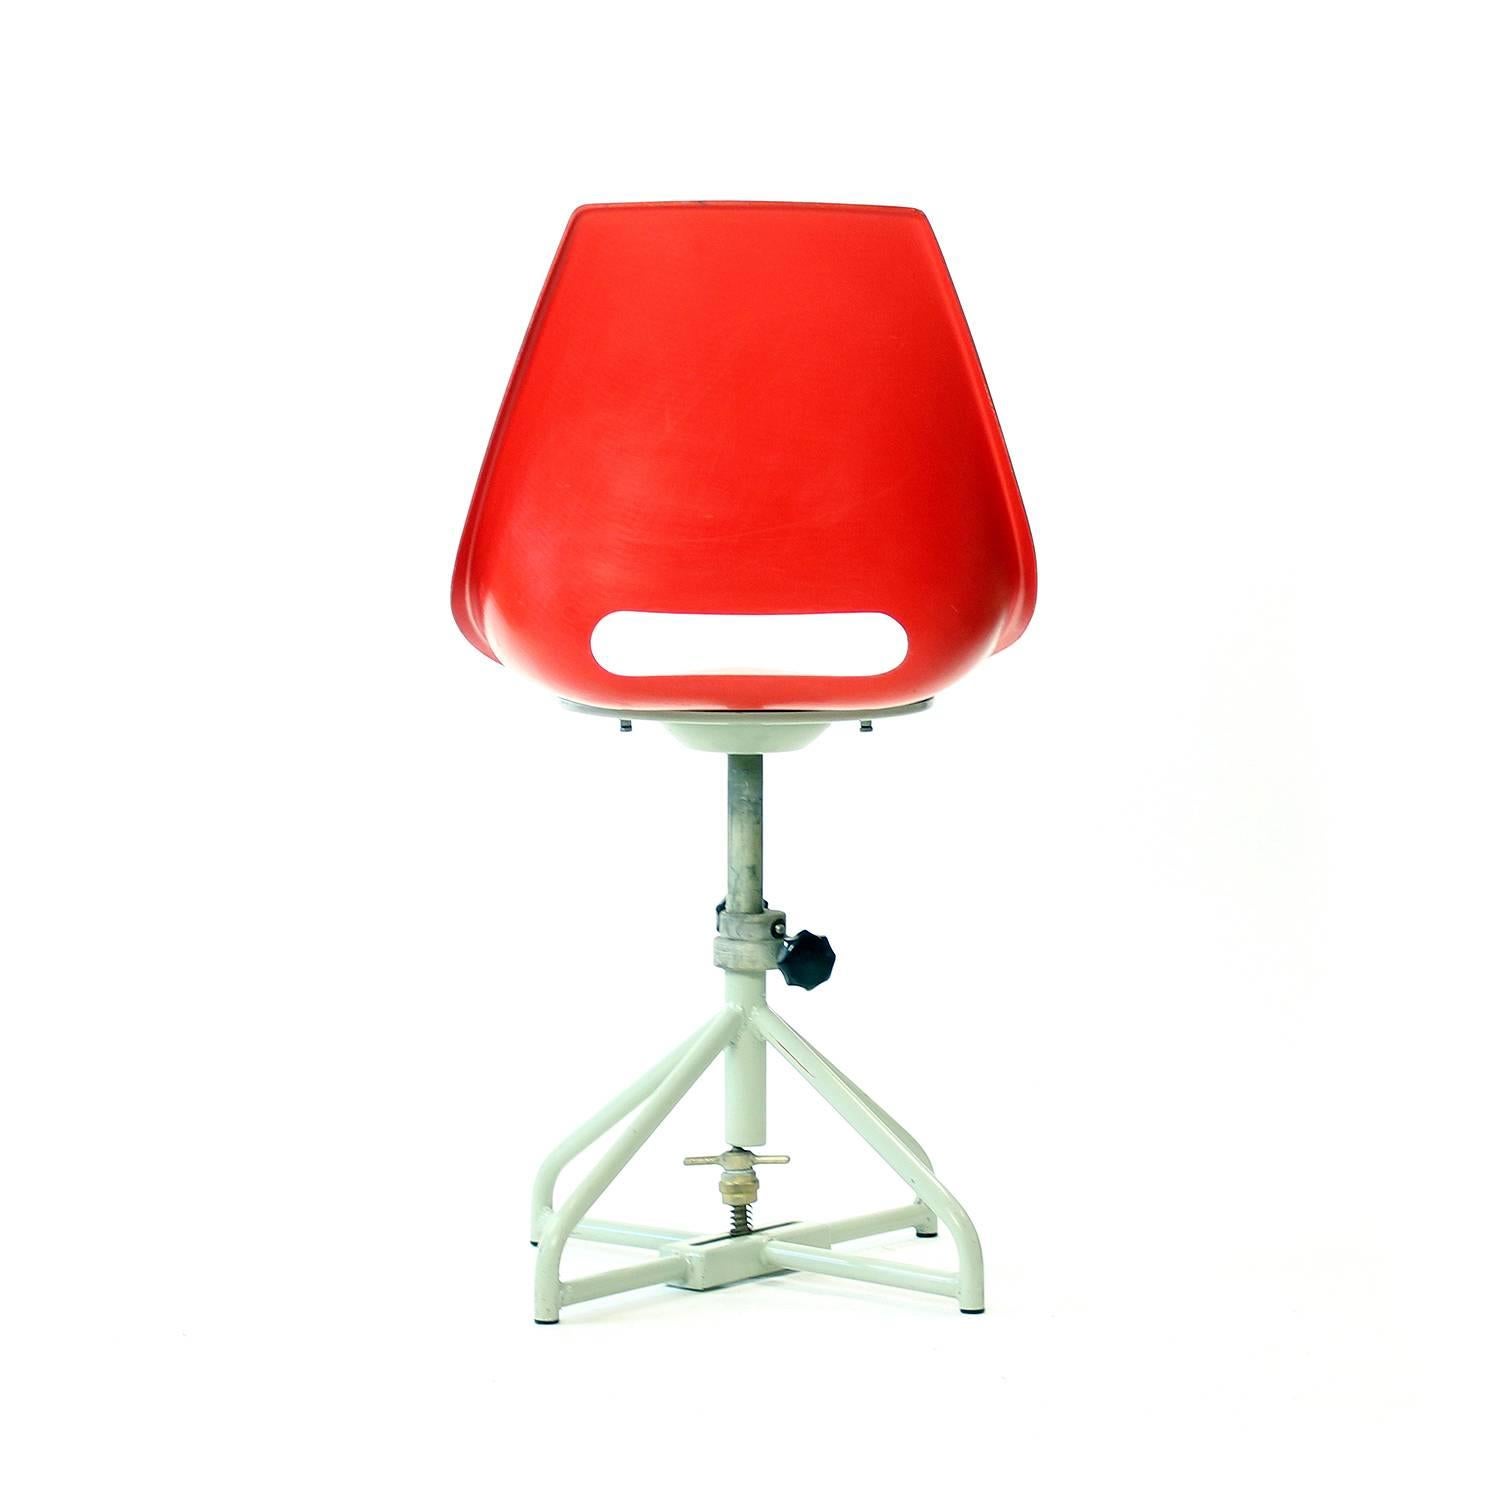 Fiberglass Original Vertex Chairs by Miroslav Navratil, circa 1960 For Sale